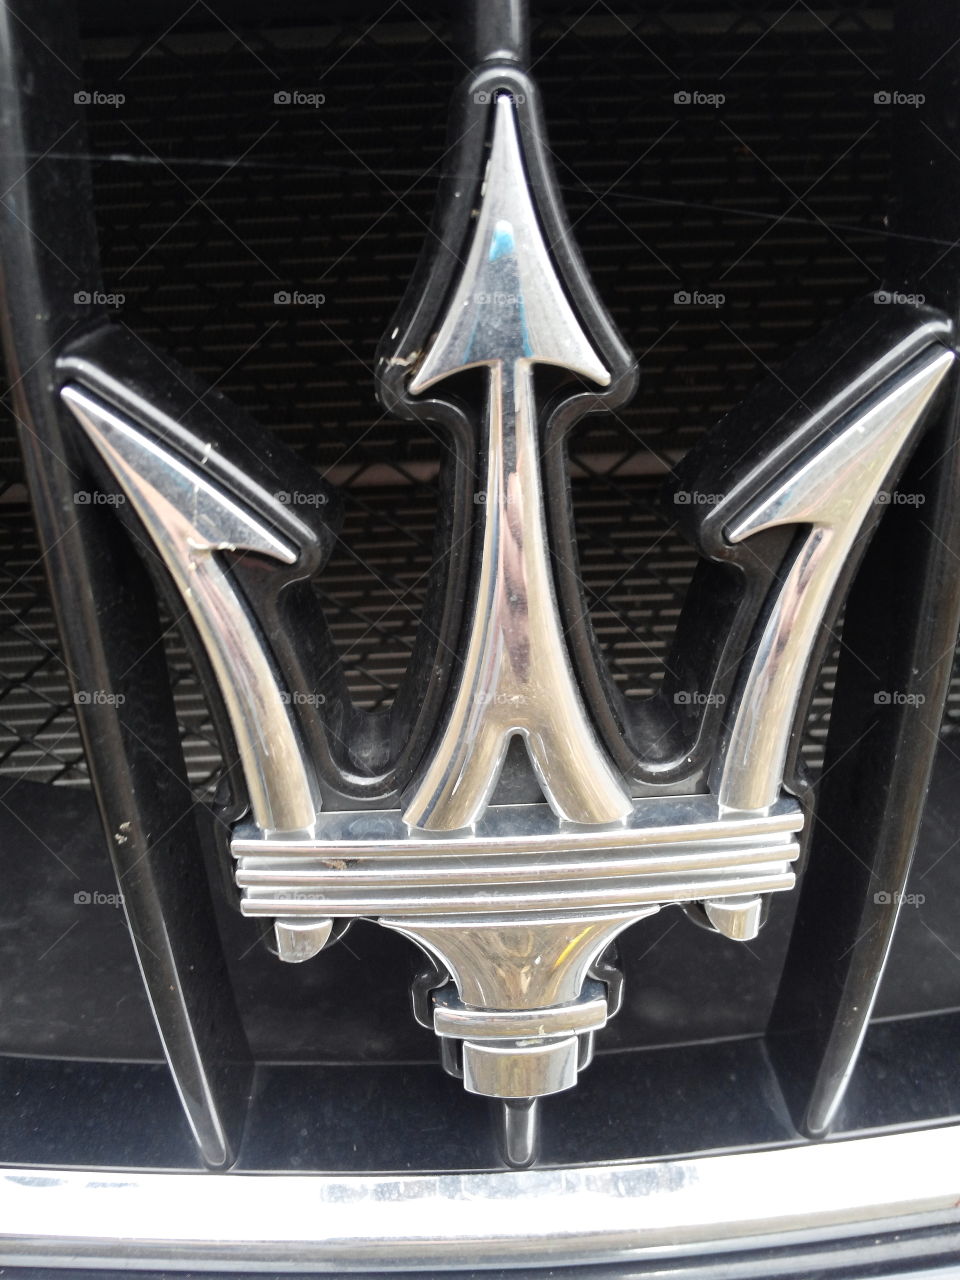 Maserati emblem